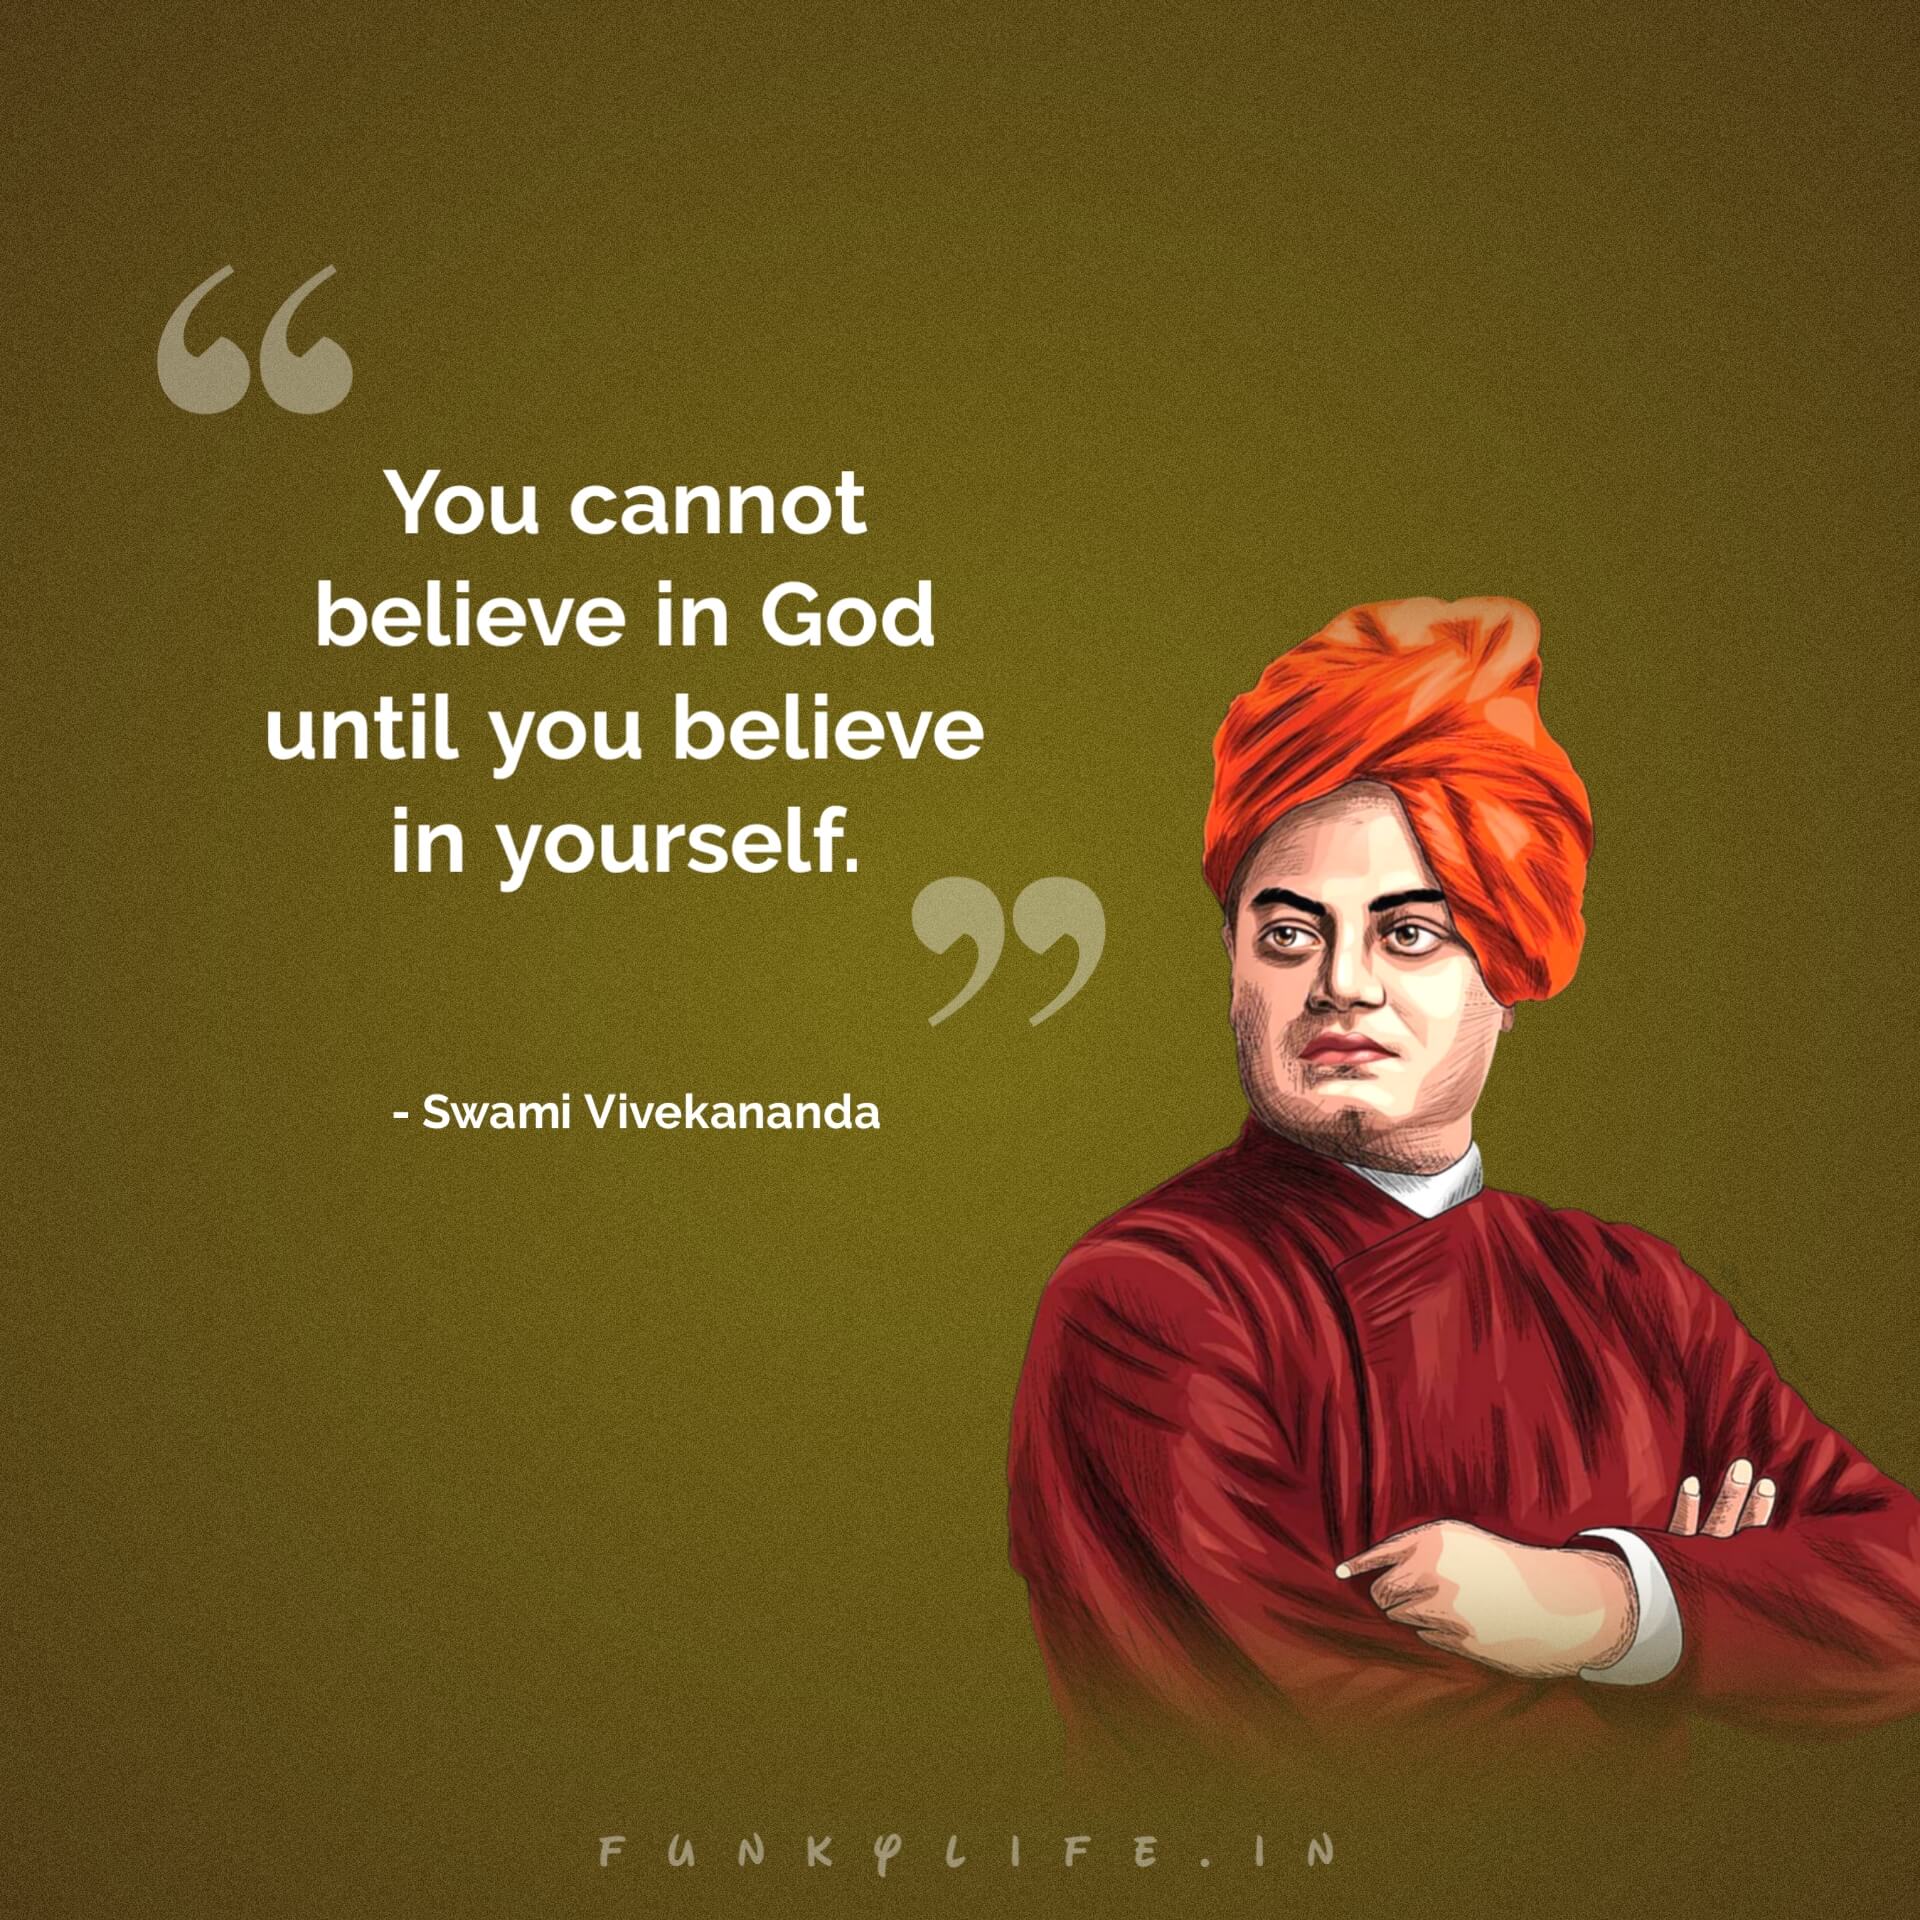 Swami Vivekananda Quotes in English
For Success 